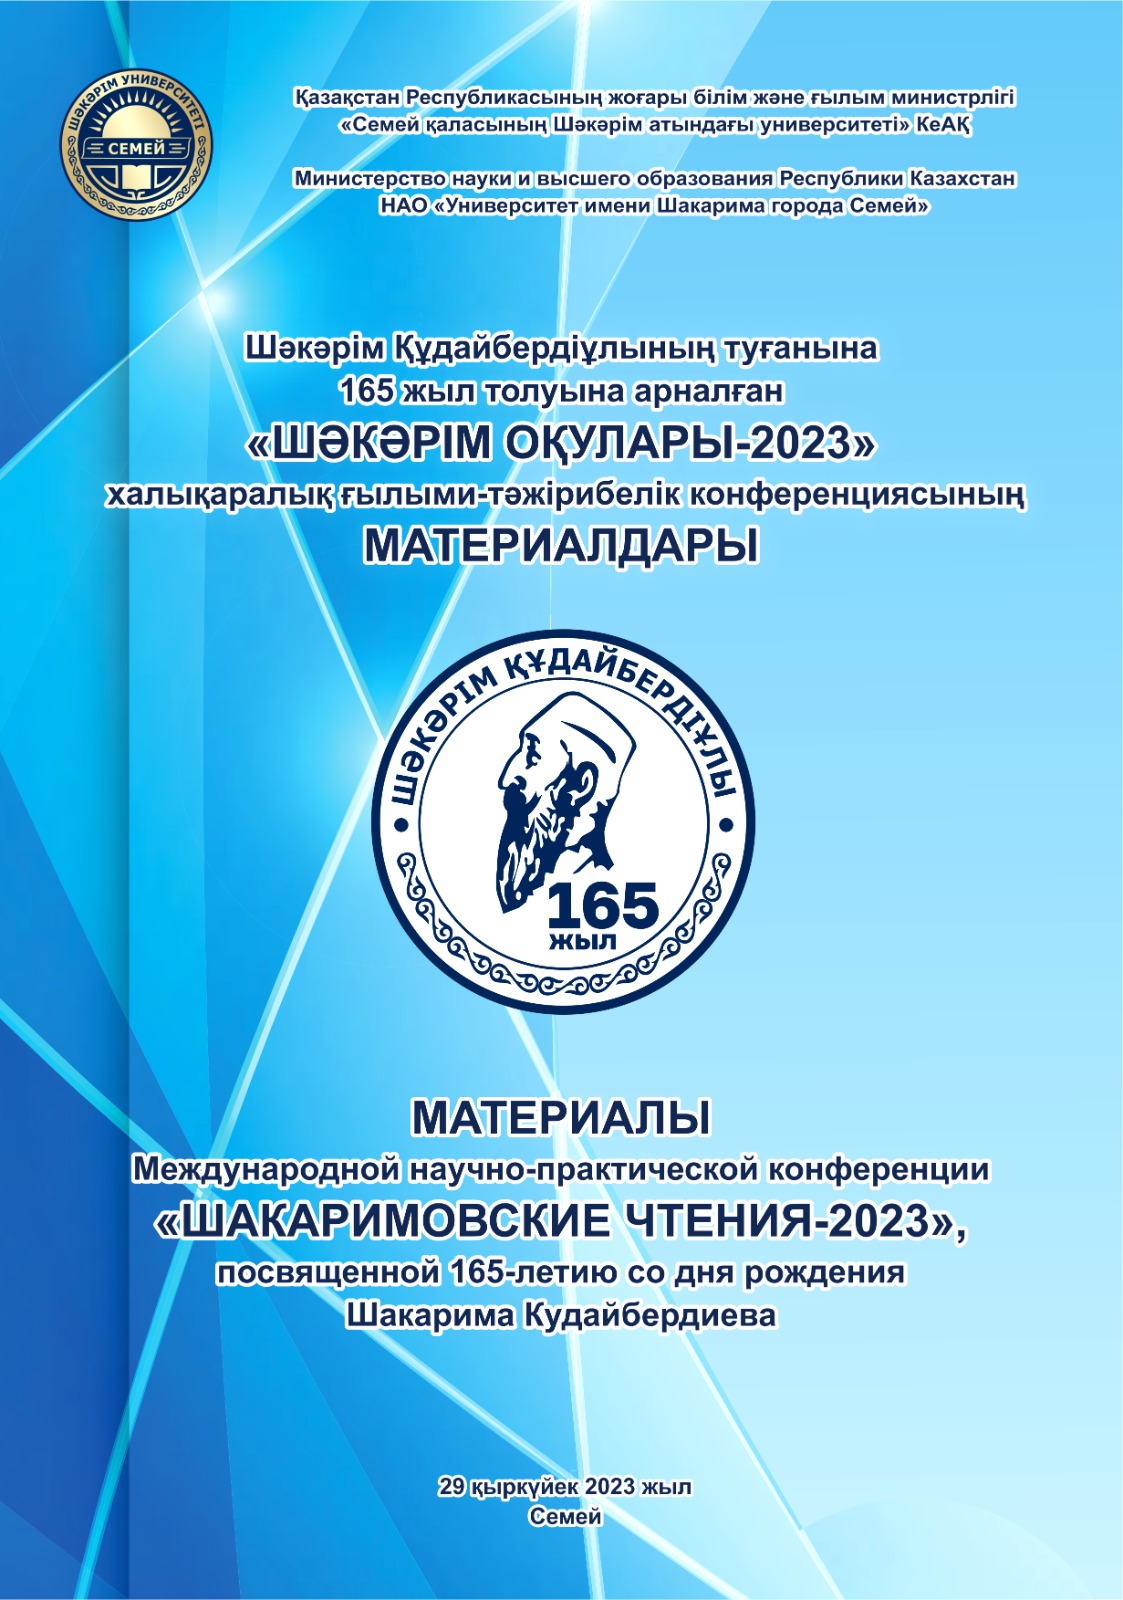 MATERIALS  International scientific and practical conference “SHAKARI READINGS –2023”, dedicated to the 165th anniversary of the birth of Shakarim Kudaiberdiev